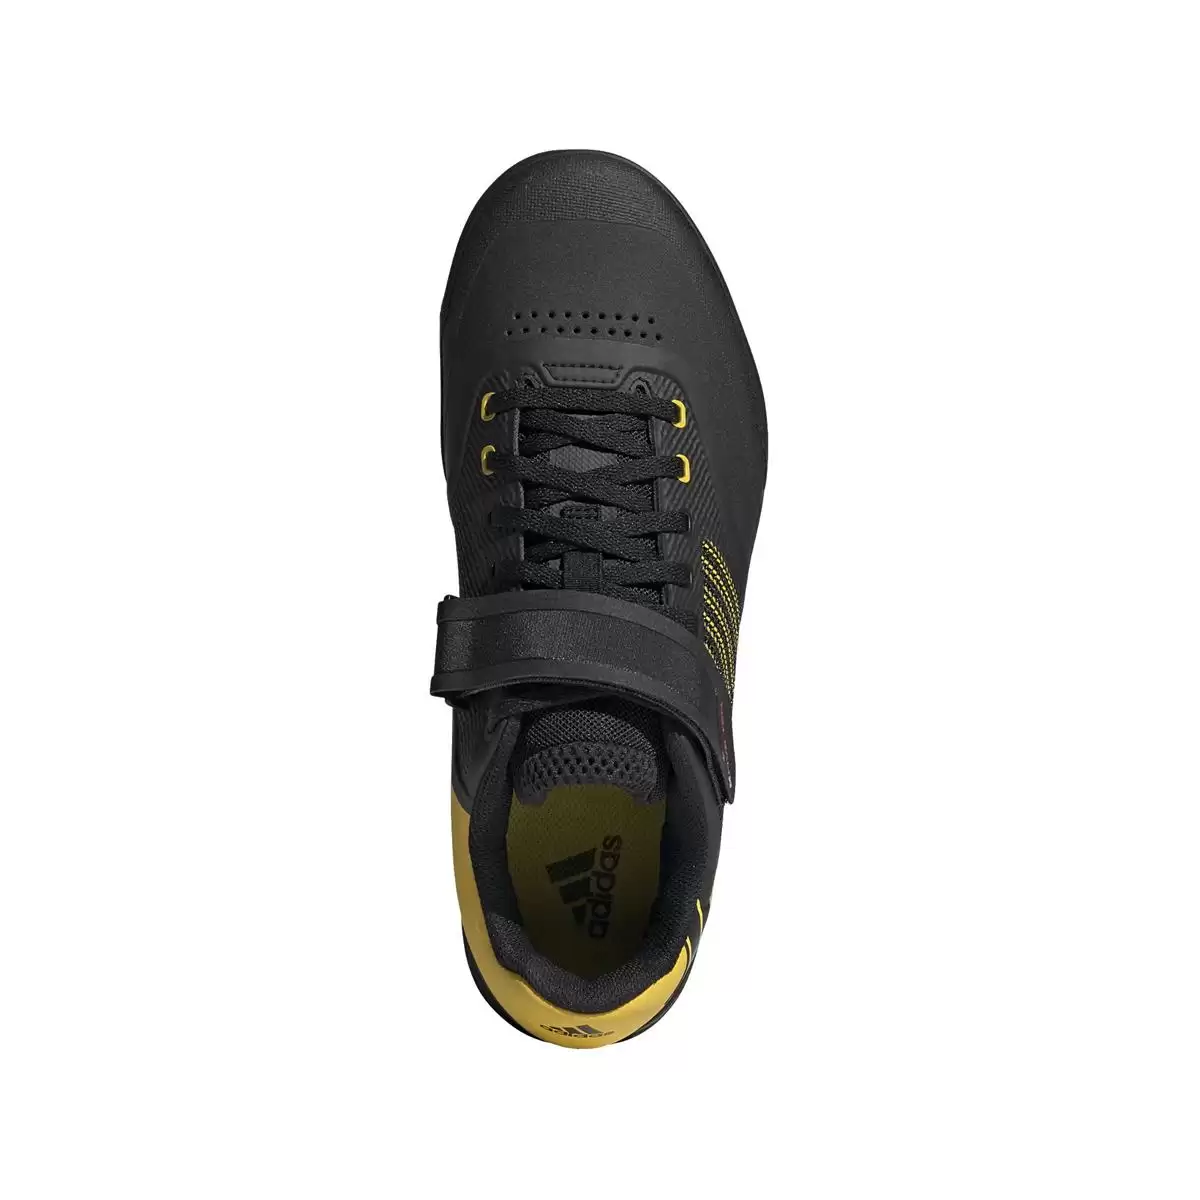 MTB Shoes Hellcat Pro Black/Yellow Size 42 #4